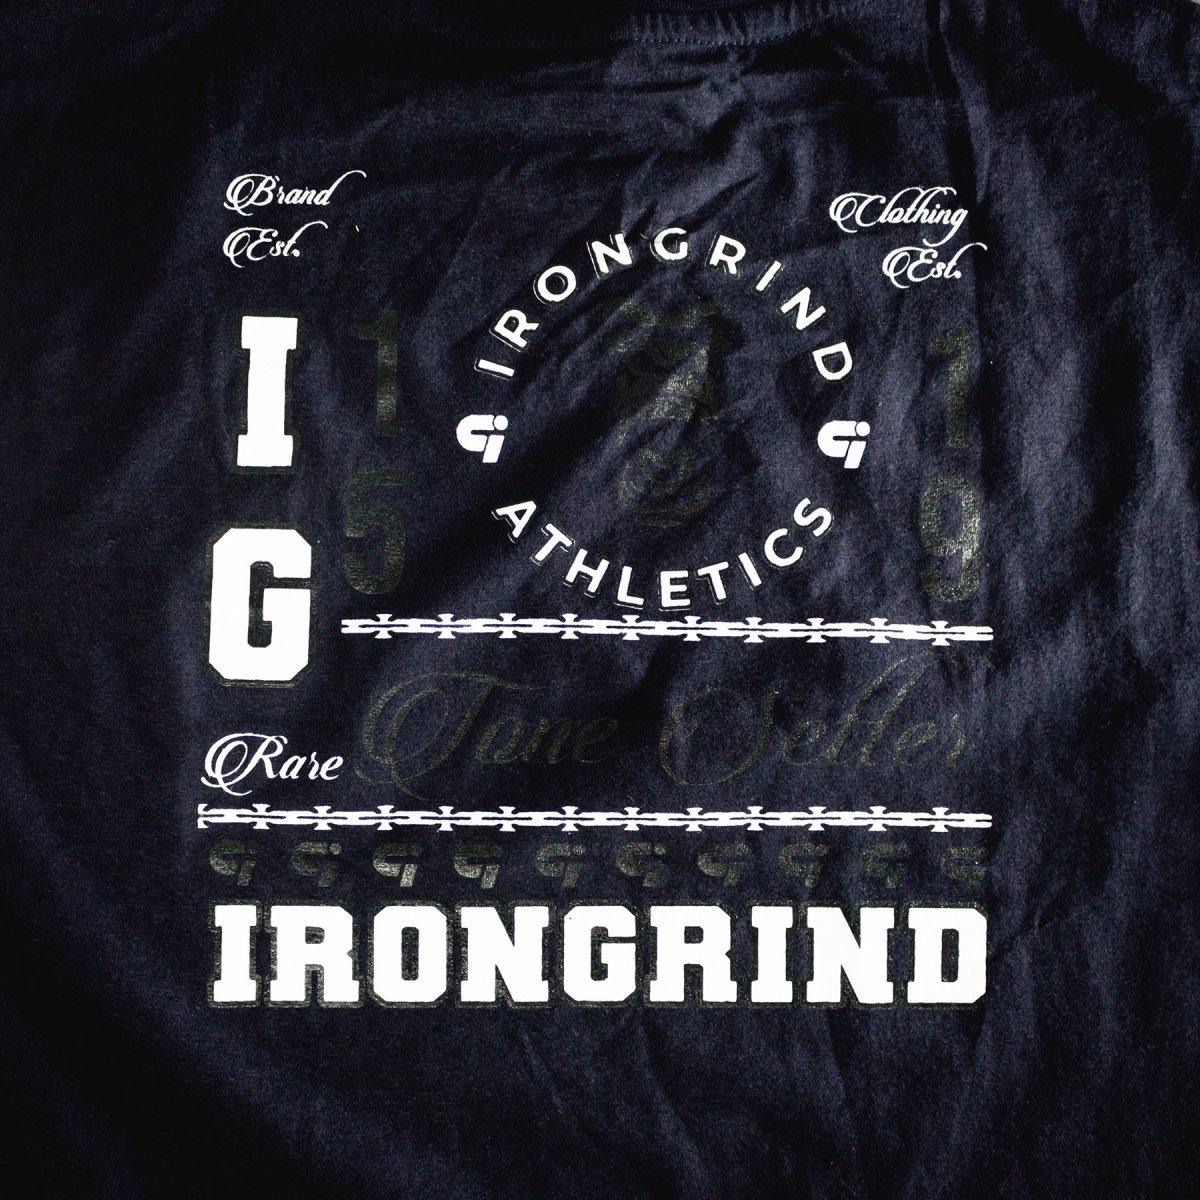 Incarnate Gorilla Crop Top - Navy Blue - IronGrind Athletics - activewear - gymshark - alphalete